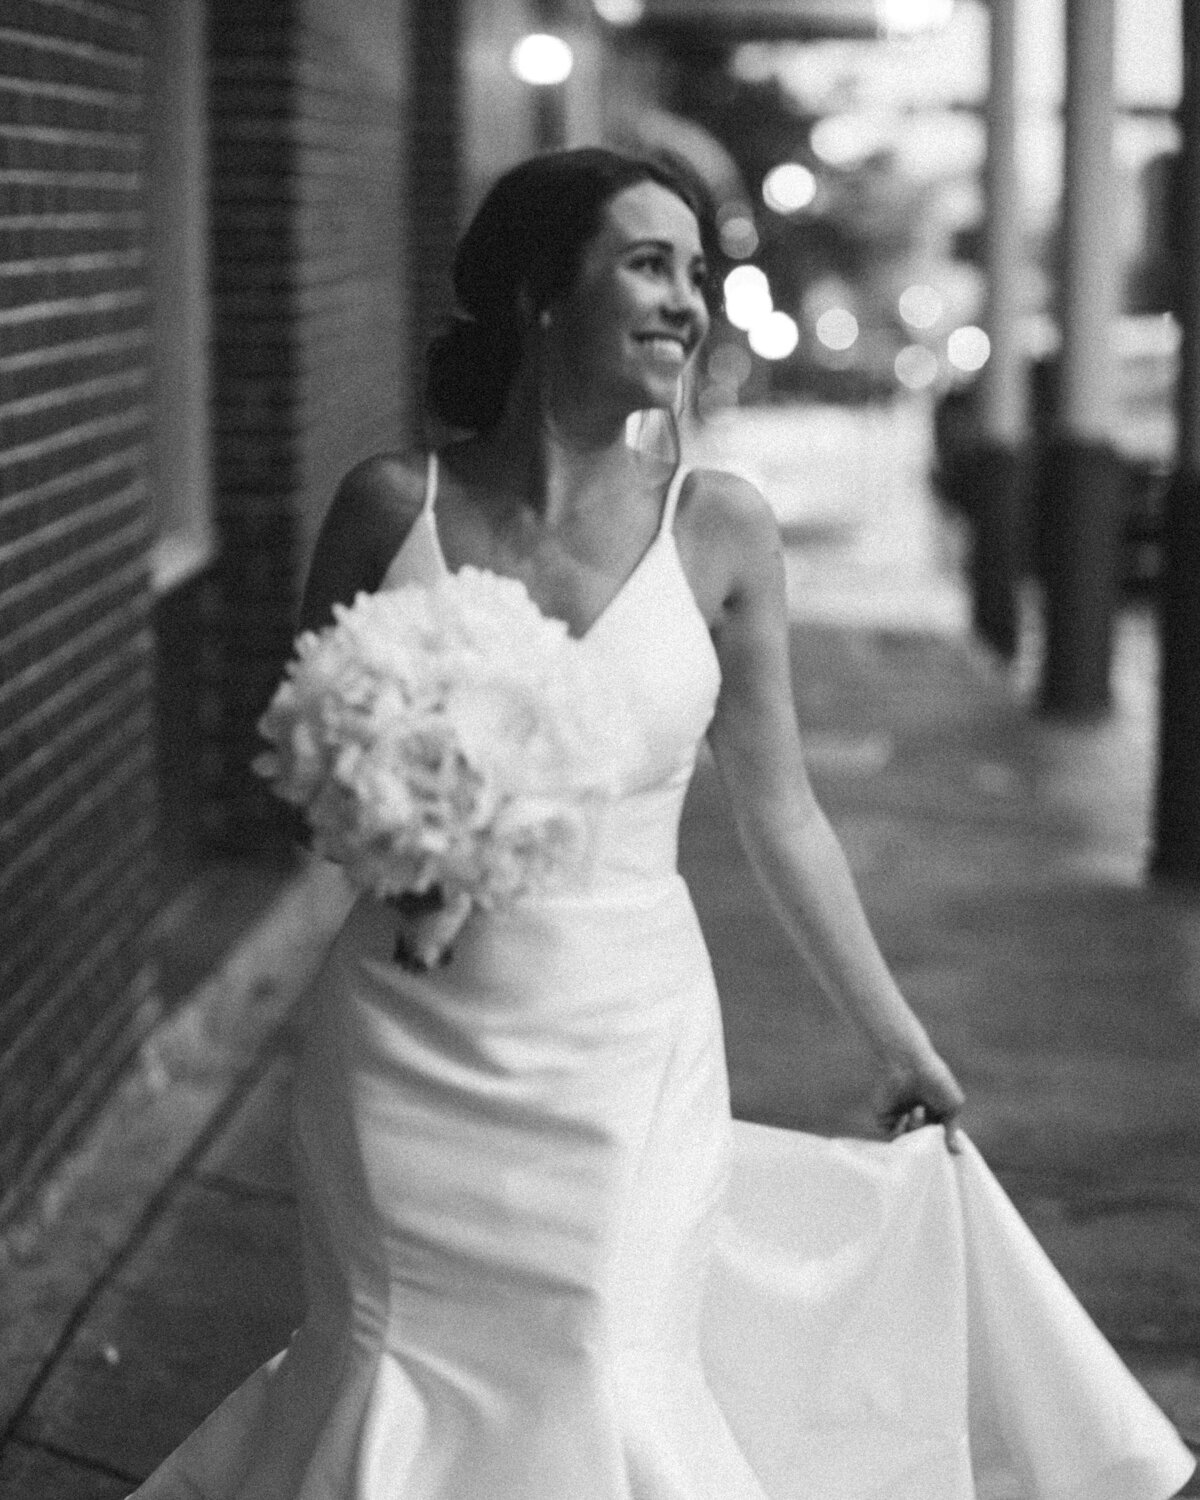 Bride smiles as she walks down a sidewalk on her wedding day